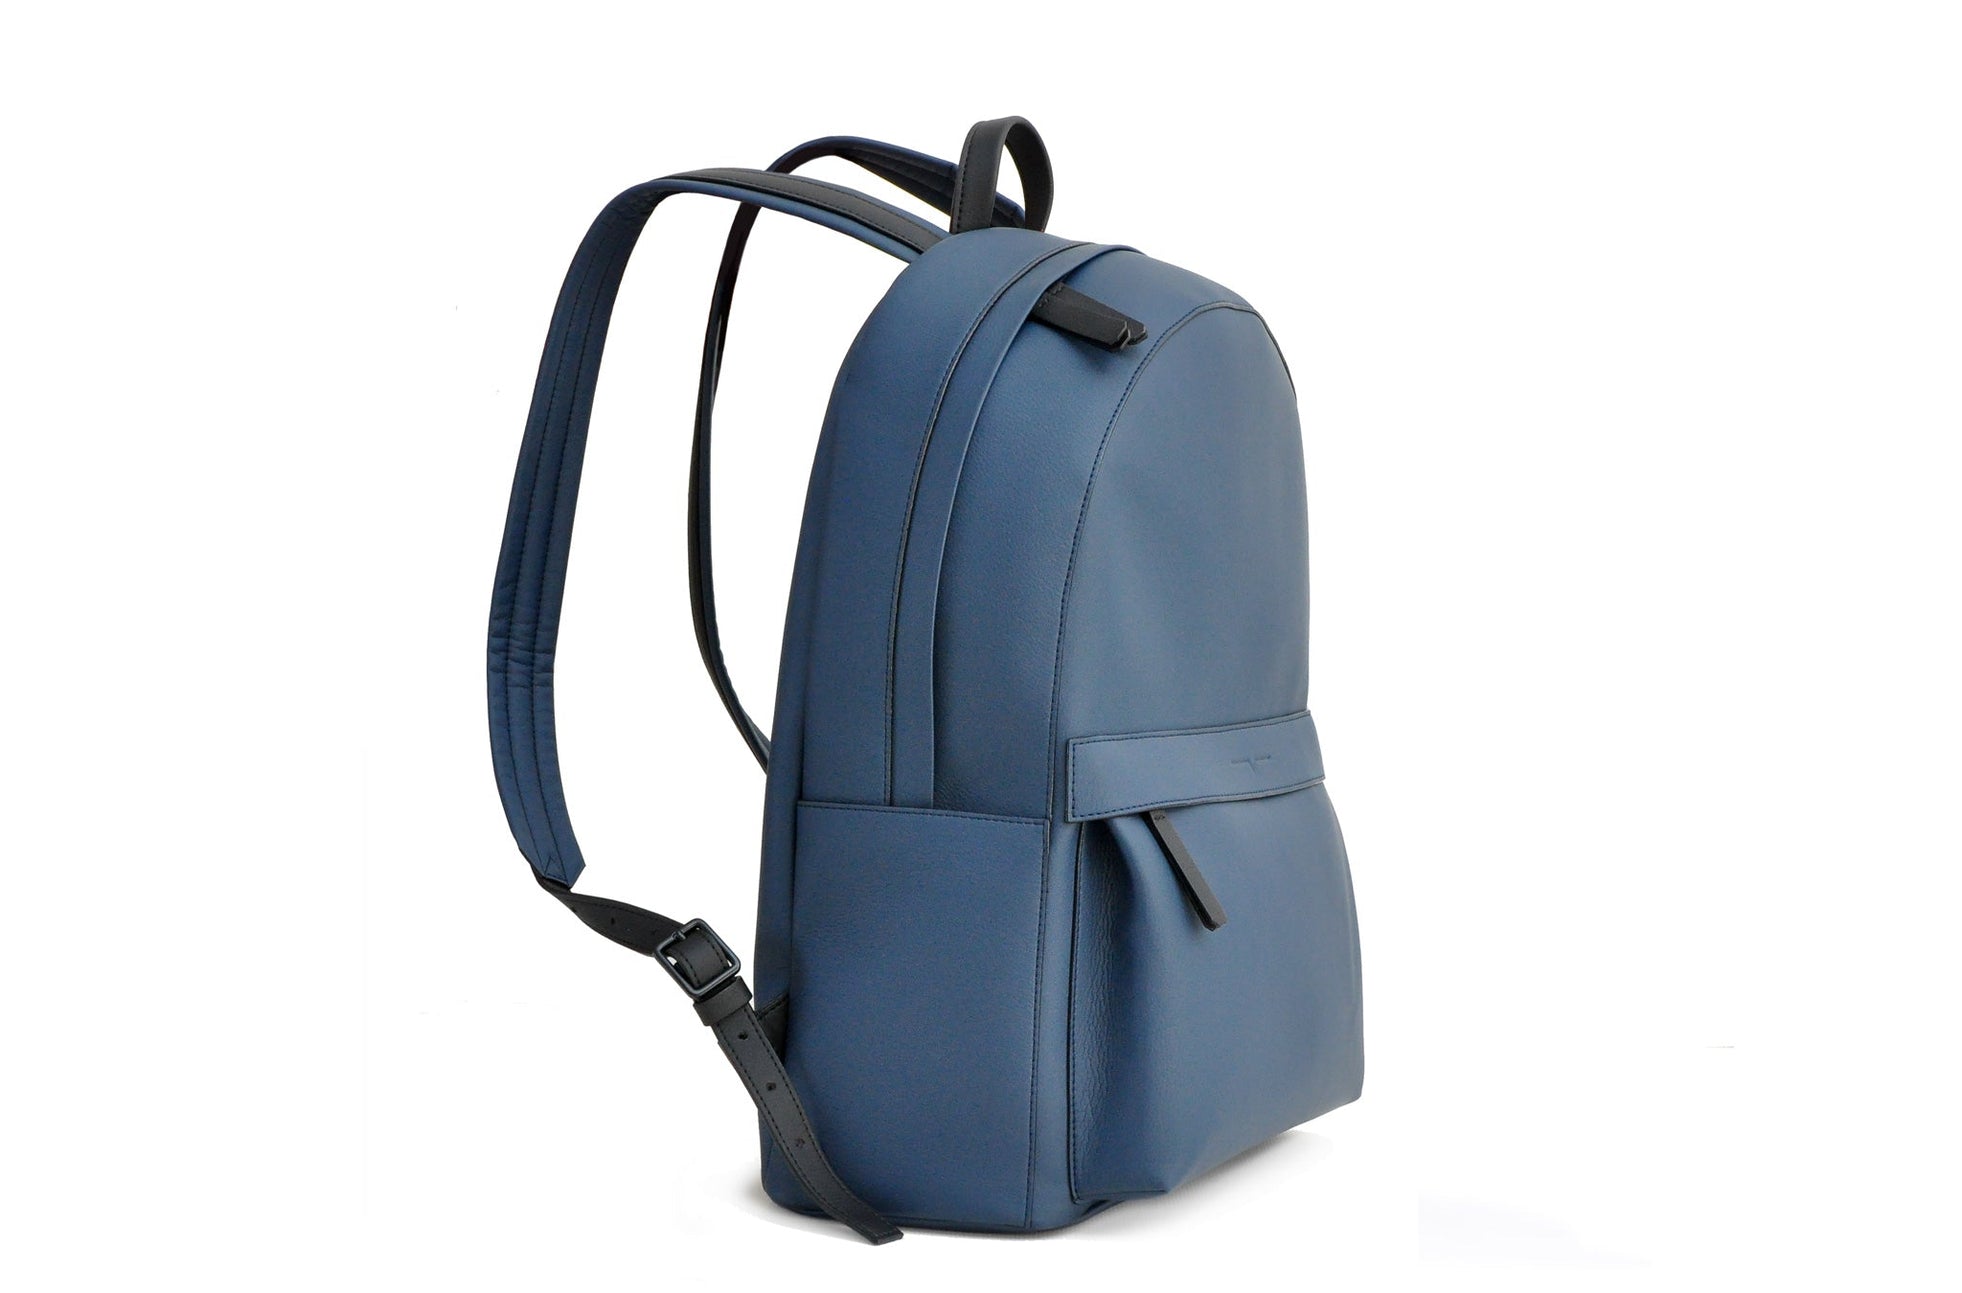 The Classic Backpack - Sample Sale in Technik in Denim and Black image 3